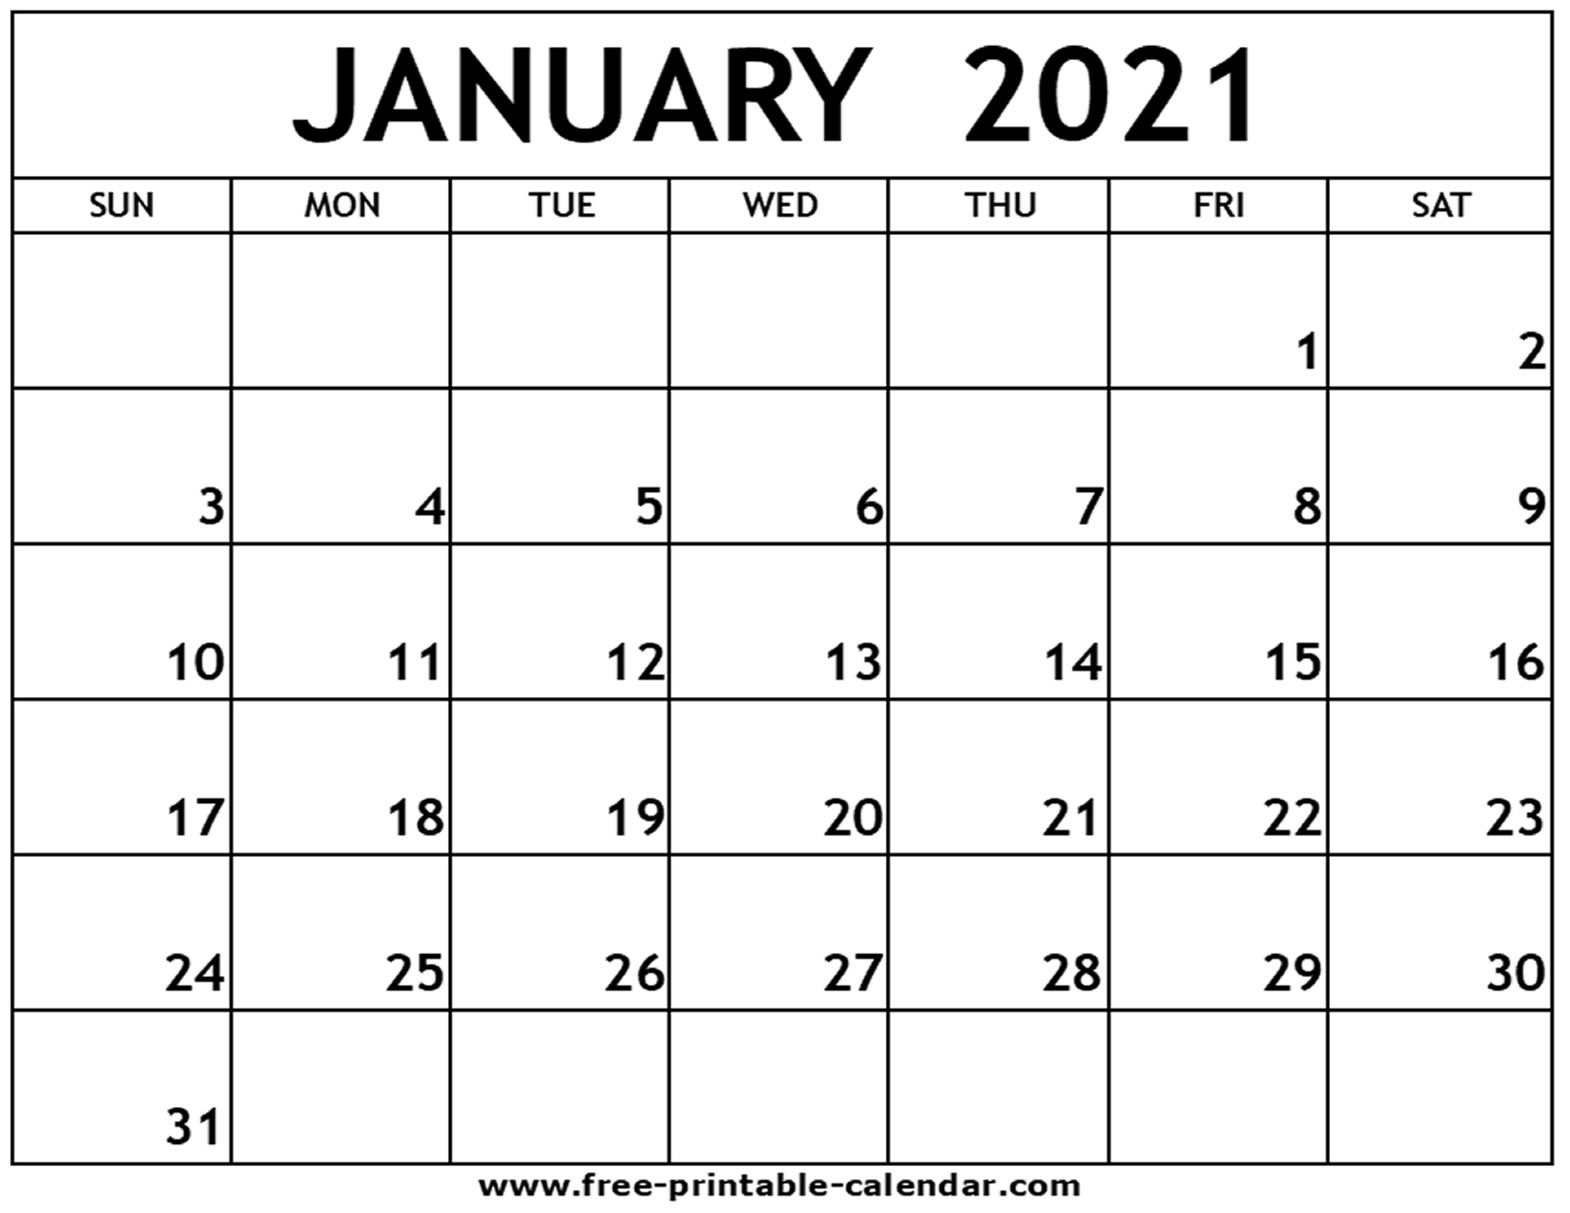 January 2021 Printable Calendar - Free-Printable-Calendar